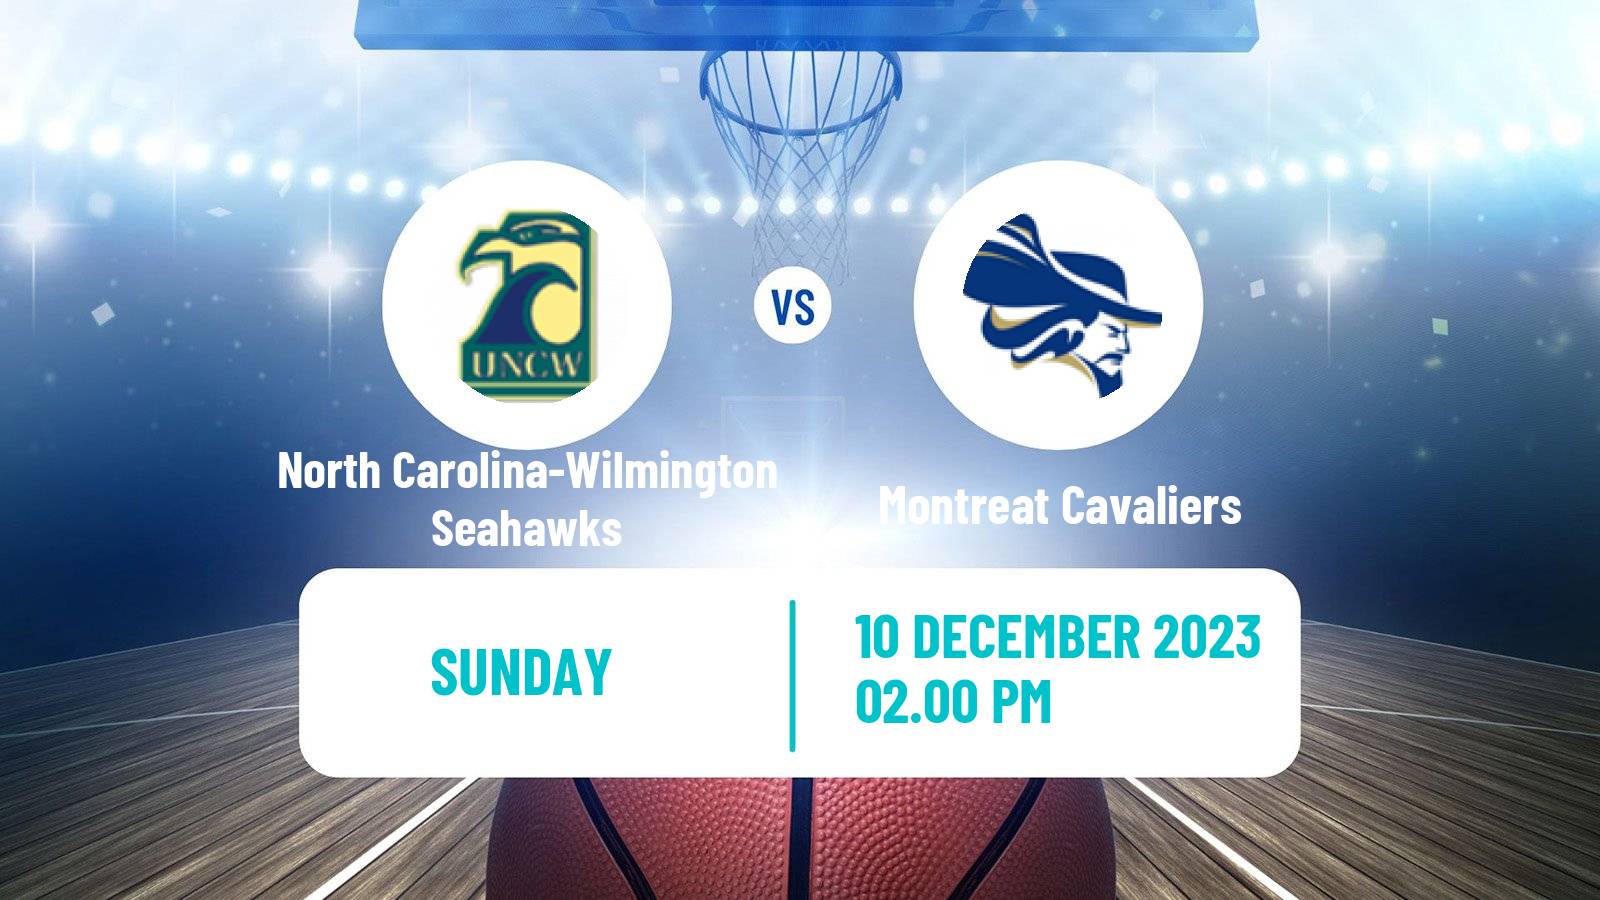 Basketball NCAA College Basketball North Carolina-Wilmington Seahawks - Montreat Cavaliers